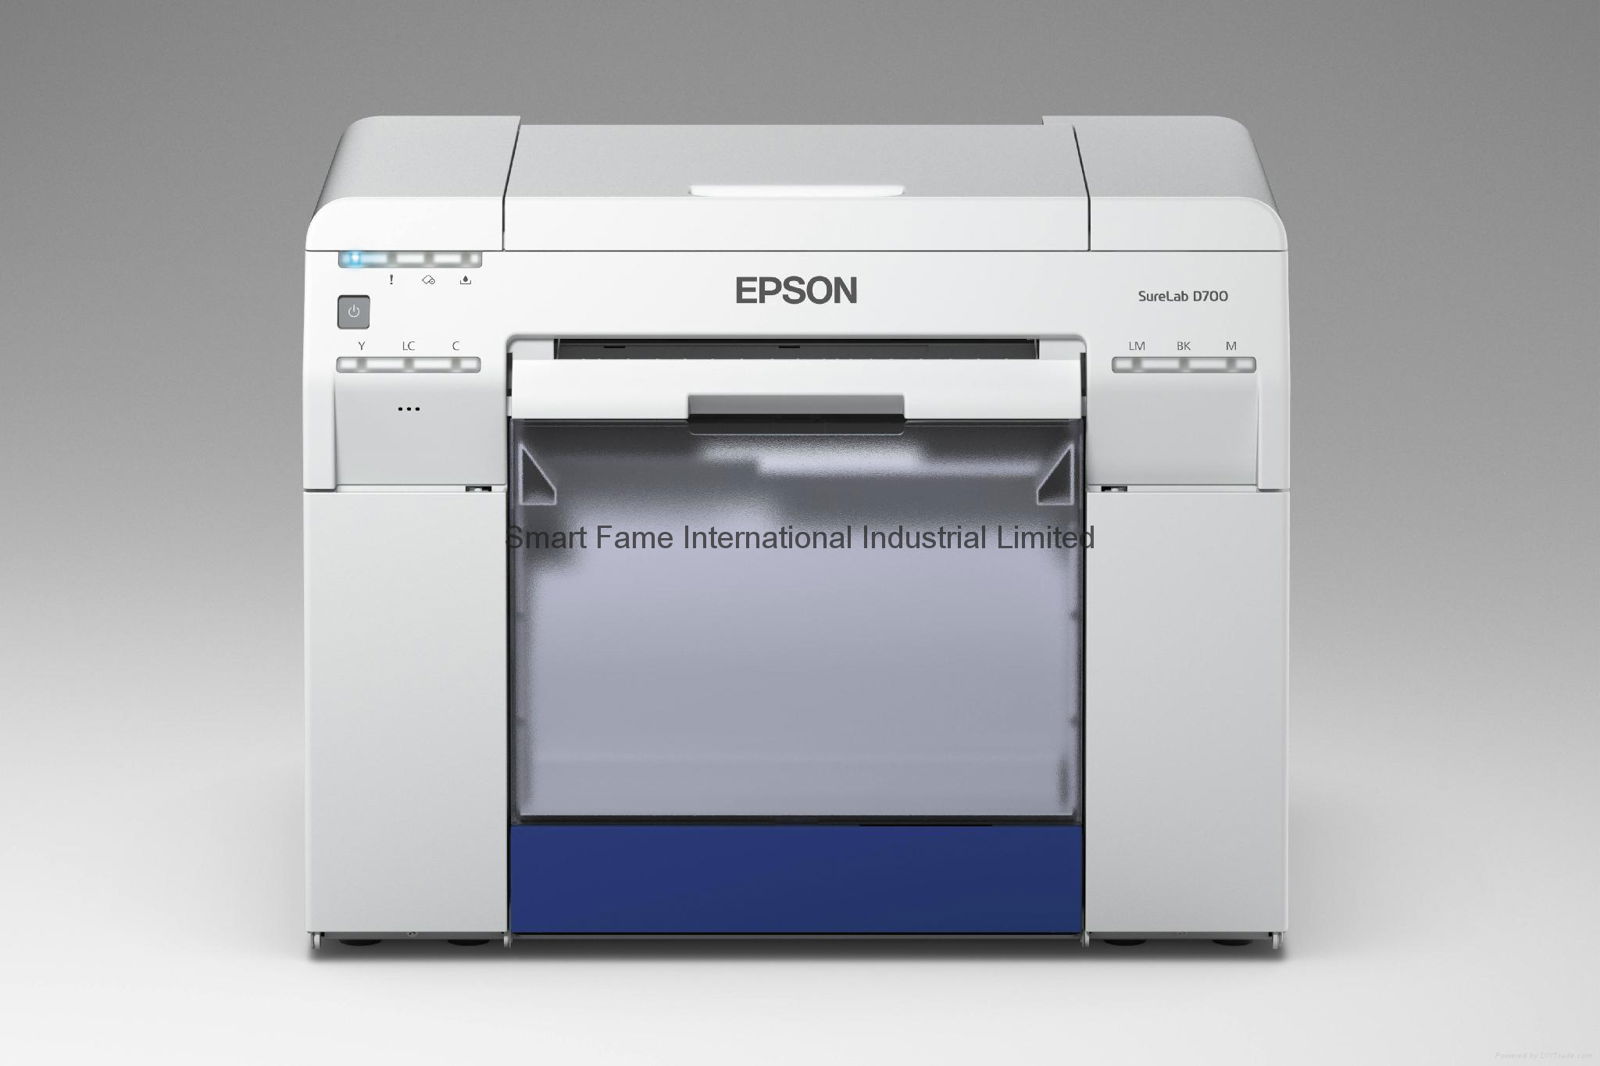 EPSON D700, Fuji Dx-100